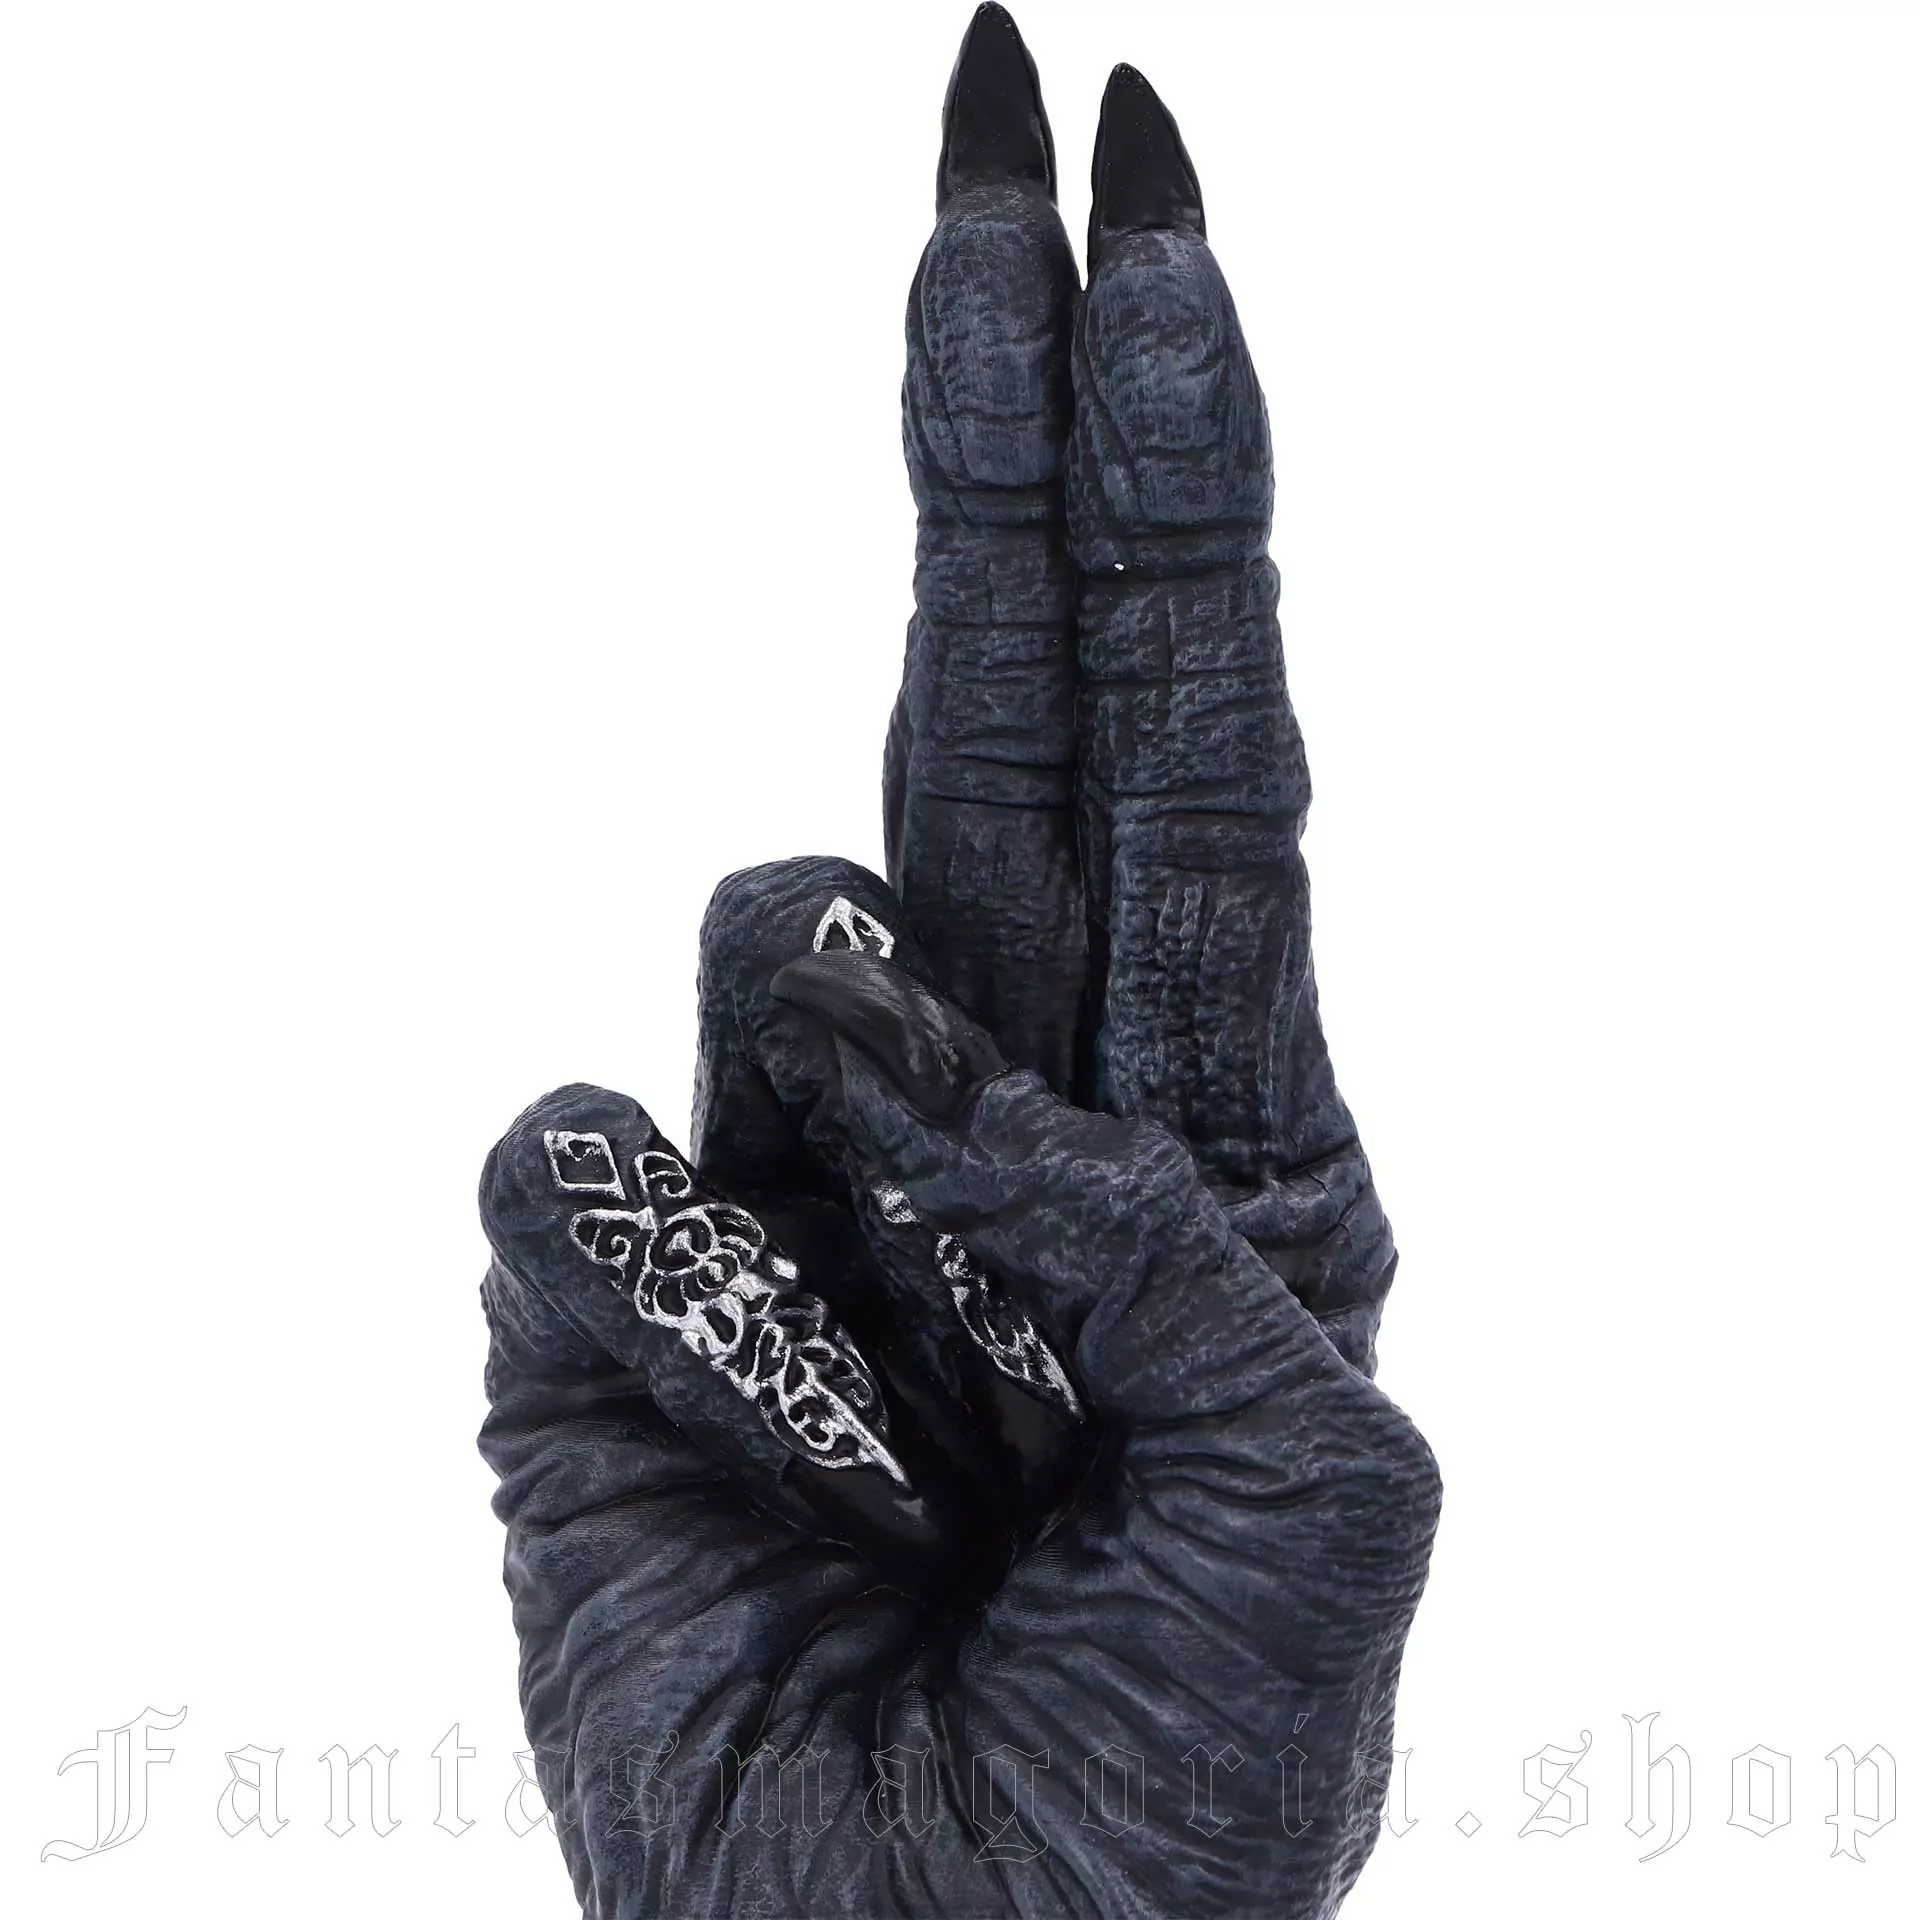 Baphomet's Prophecy Hand Figurine by Nemesis Now brand